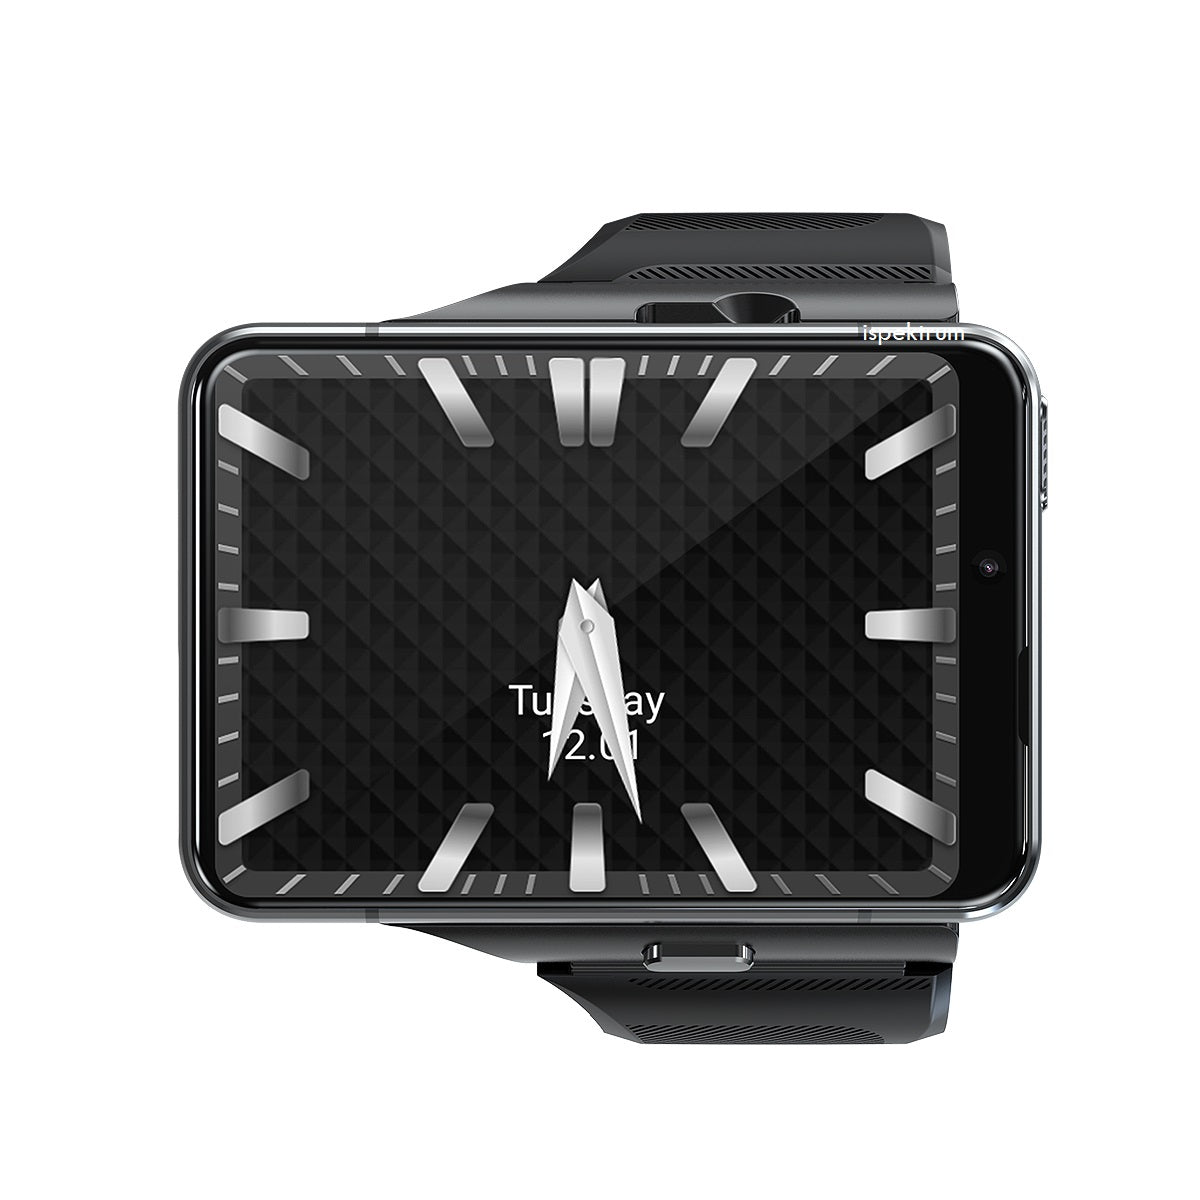 Deosai iS999 - The Ultimate Smartwatch / Phone - ISPEKTRUM Smart Watch